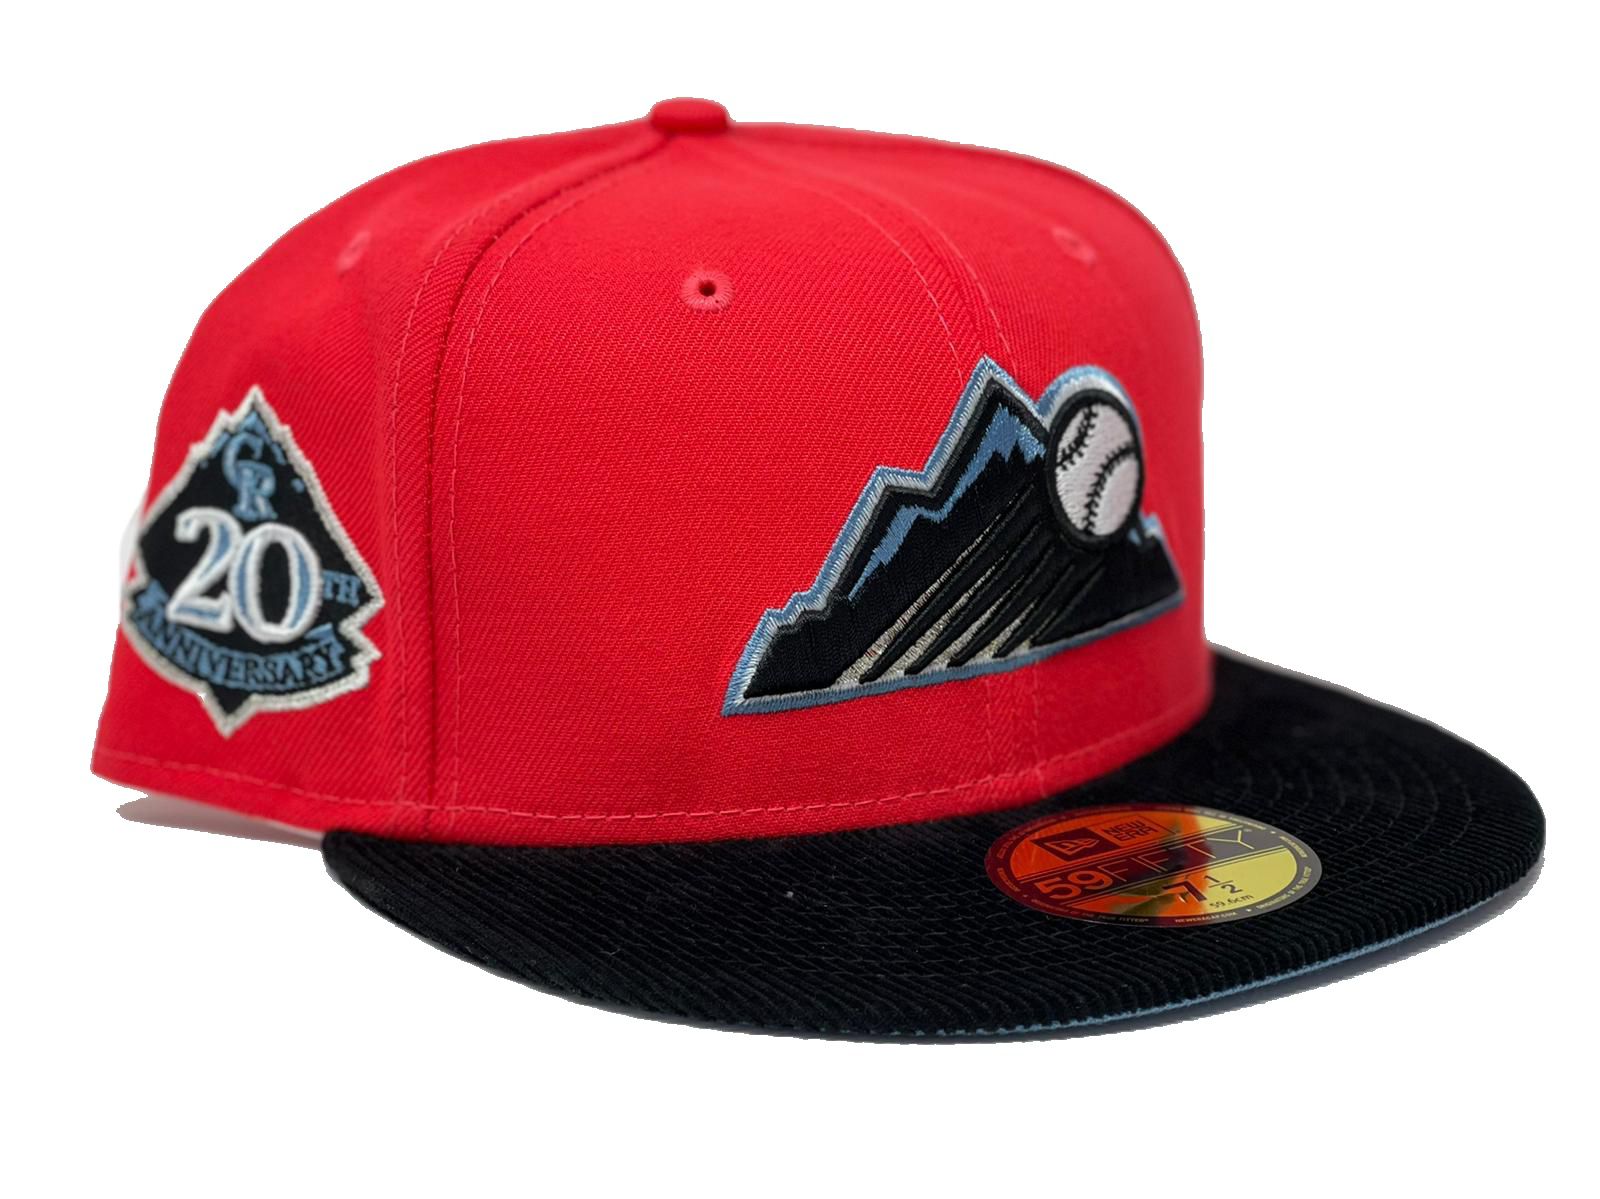 Vintage Colorado Rockies Hat New Era MLB Fitted Heritage Pin